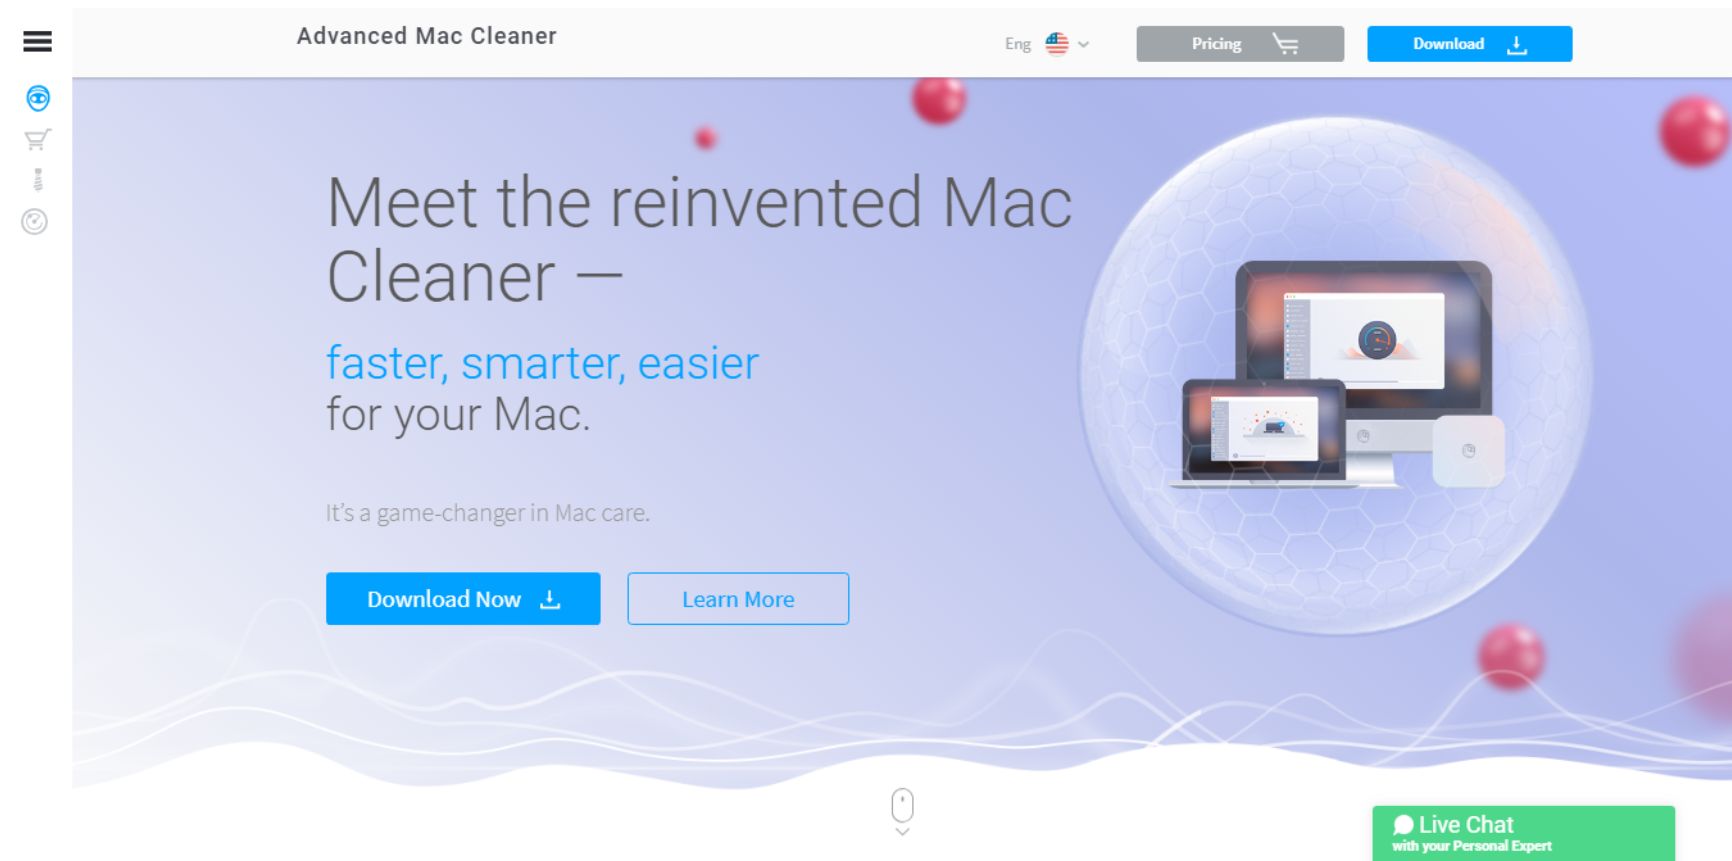 Remove mac cleanup pro virus